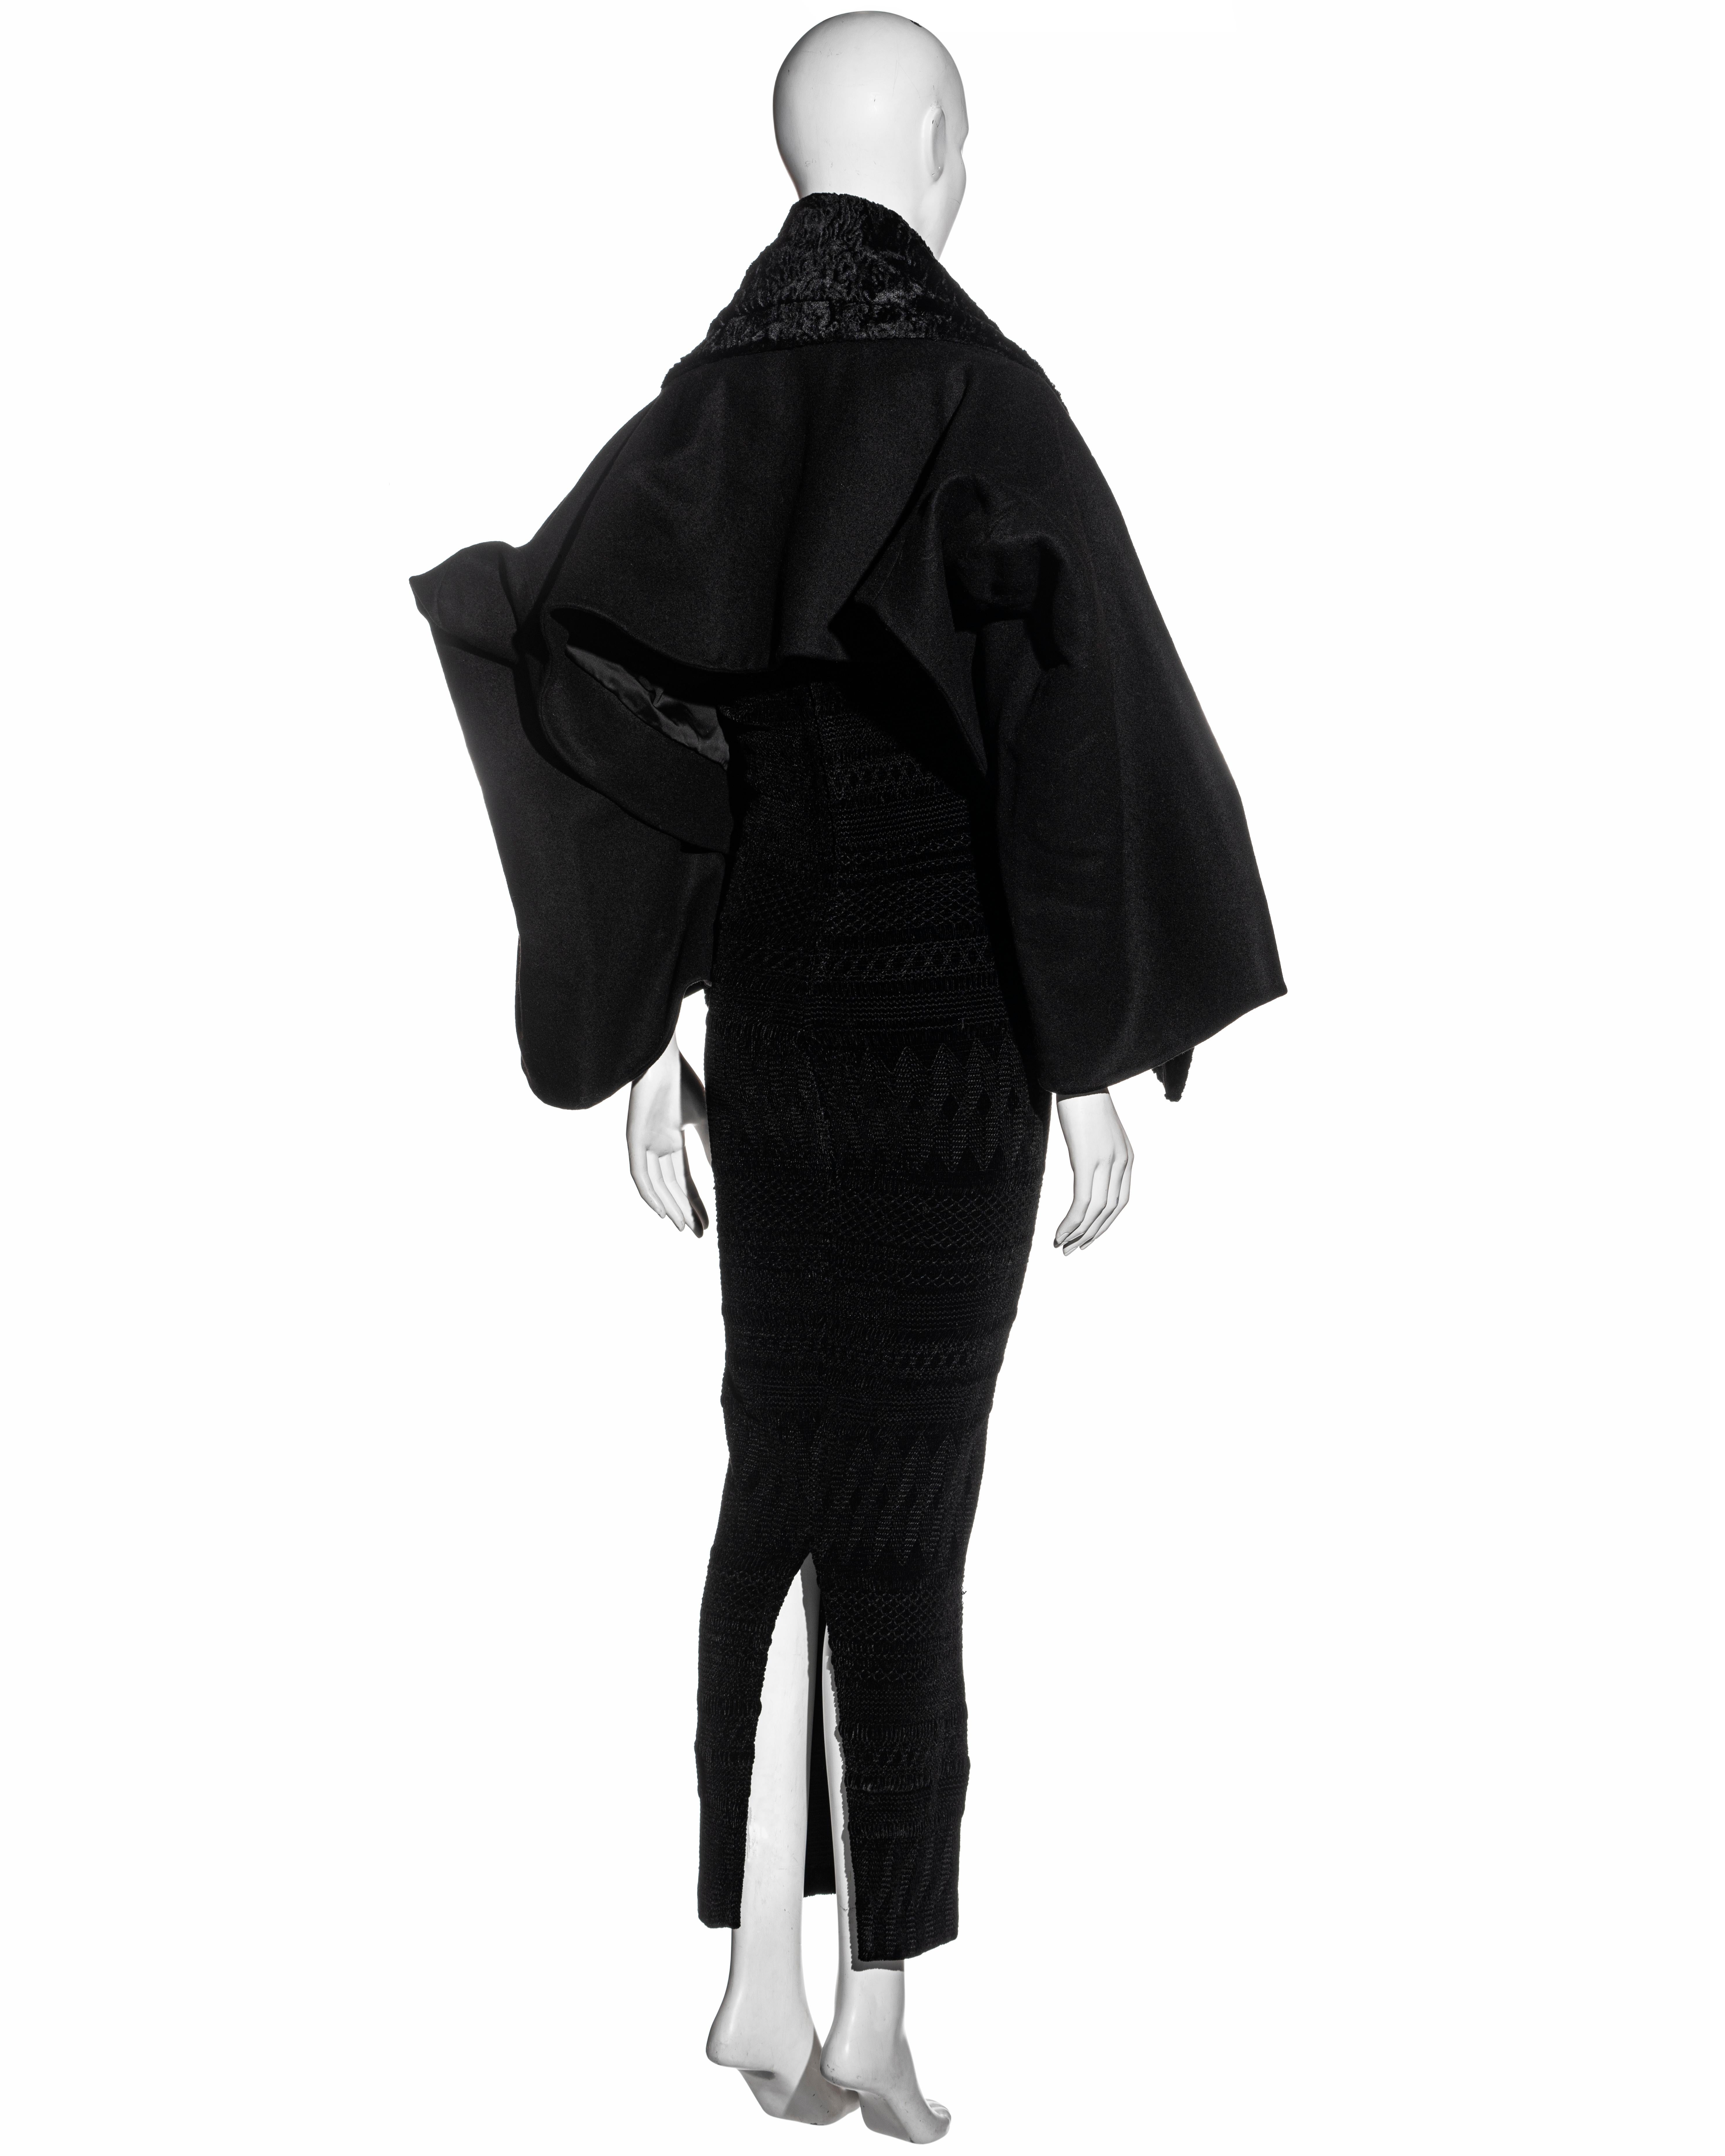 Black John Galliano black chenille opera coat and strapless corset dress, fw 1995